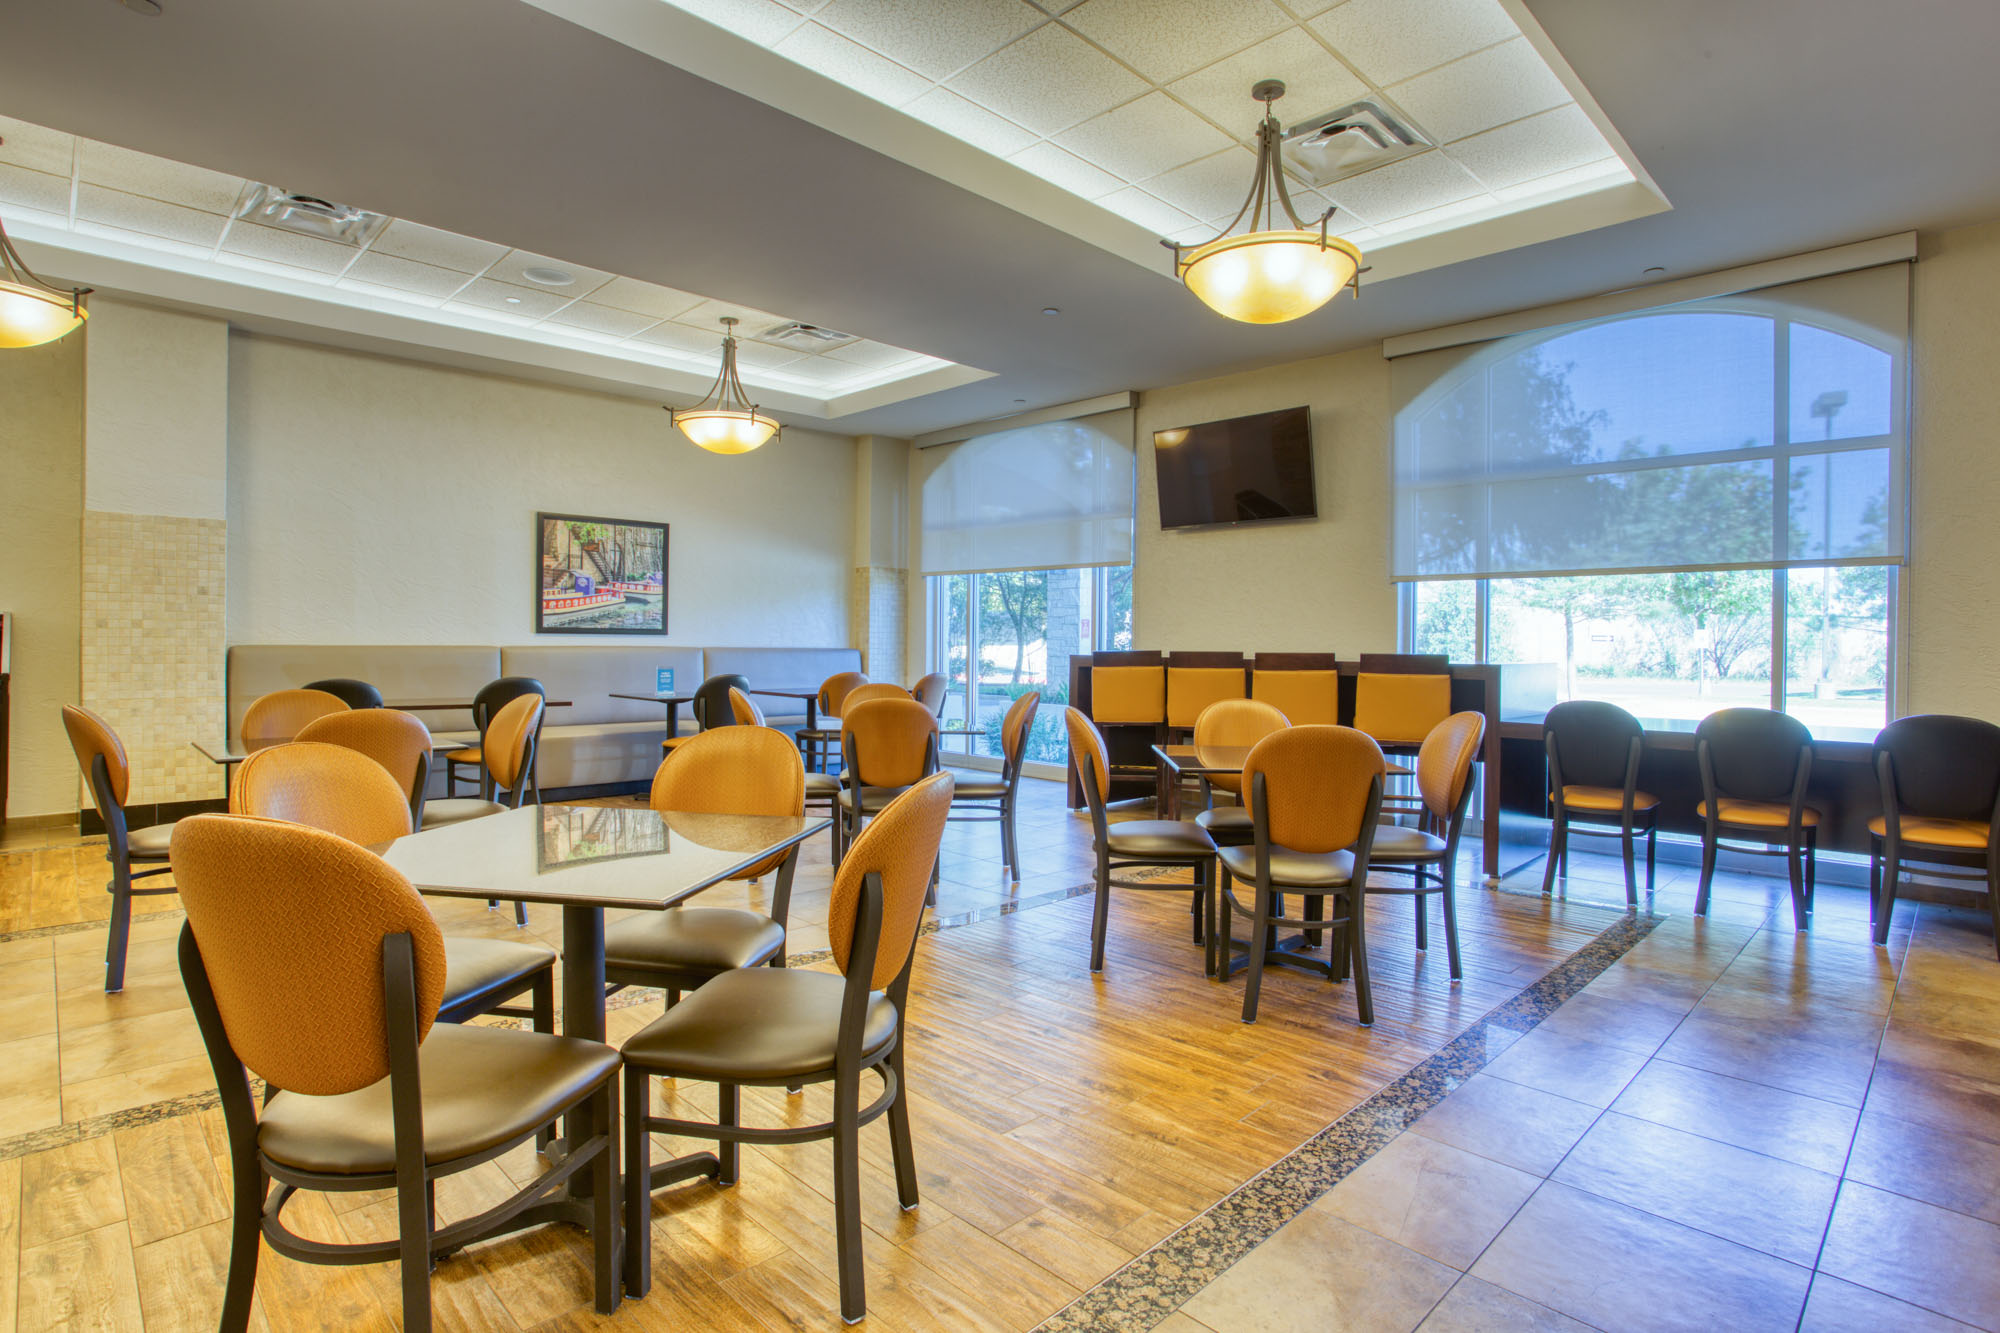 Drury Inn & Suites San Antonio near La Cantera Parkway - Drury Hotels